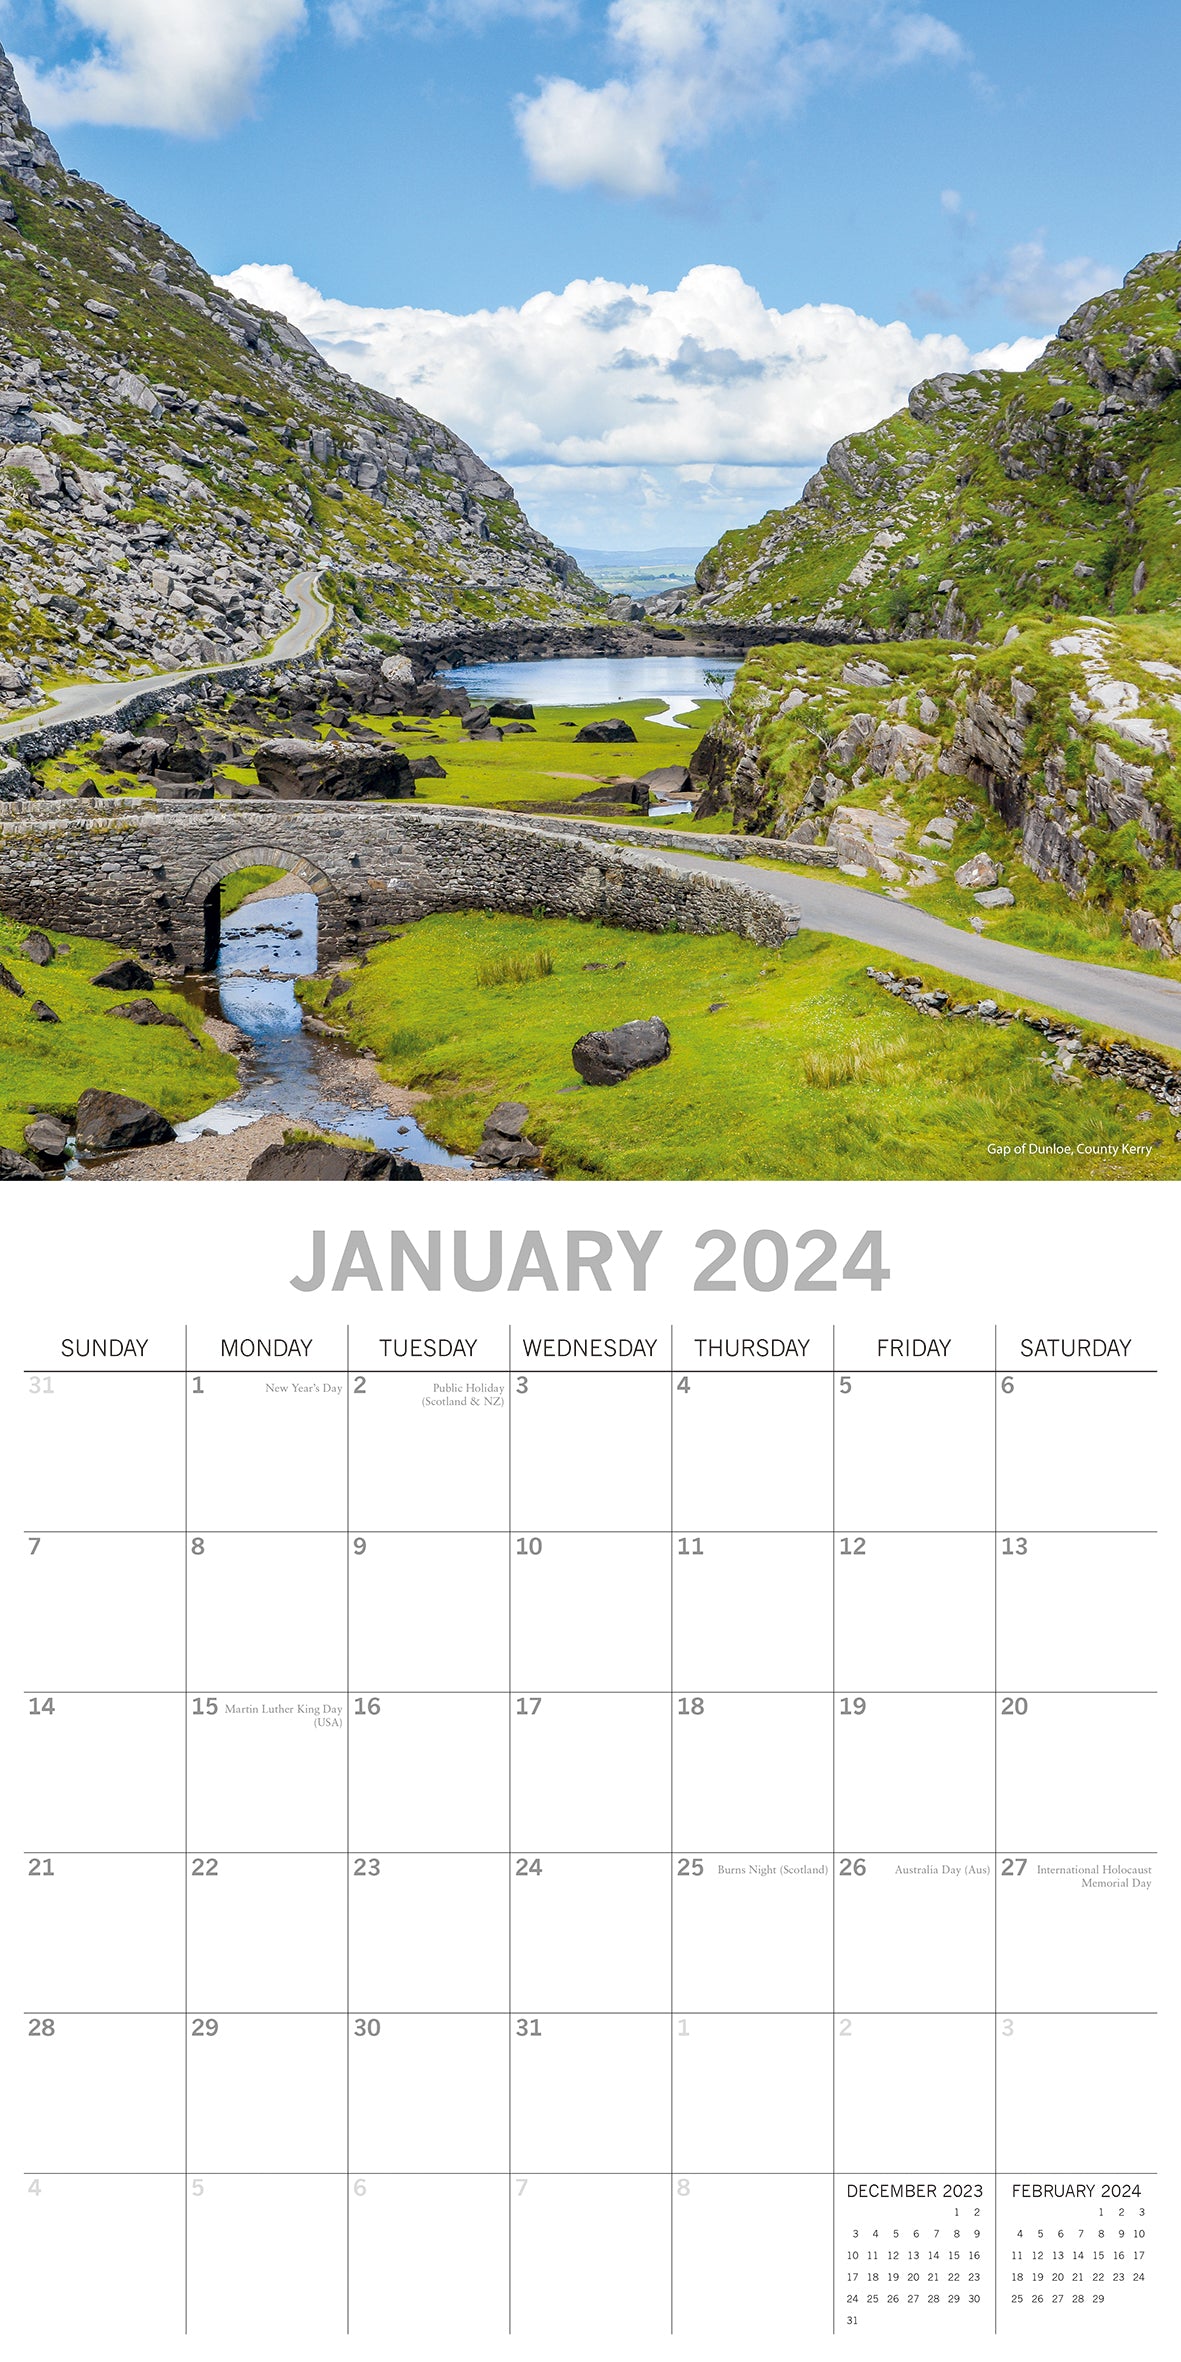 Ireland - 2024 Square Wall Calendar 16 Months Premium Planner Xmas New Year Gift